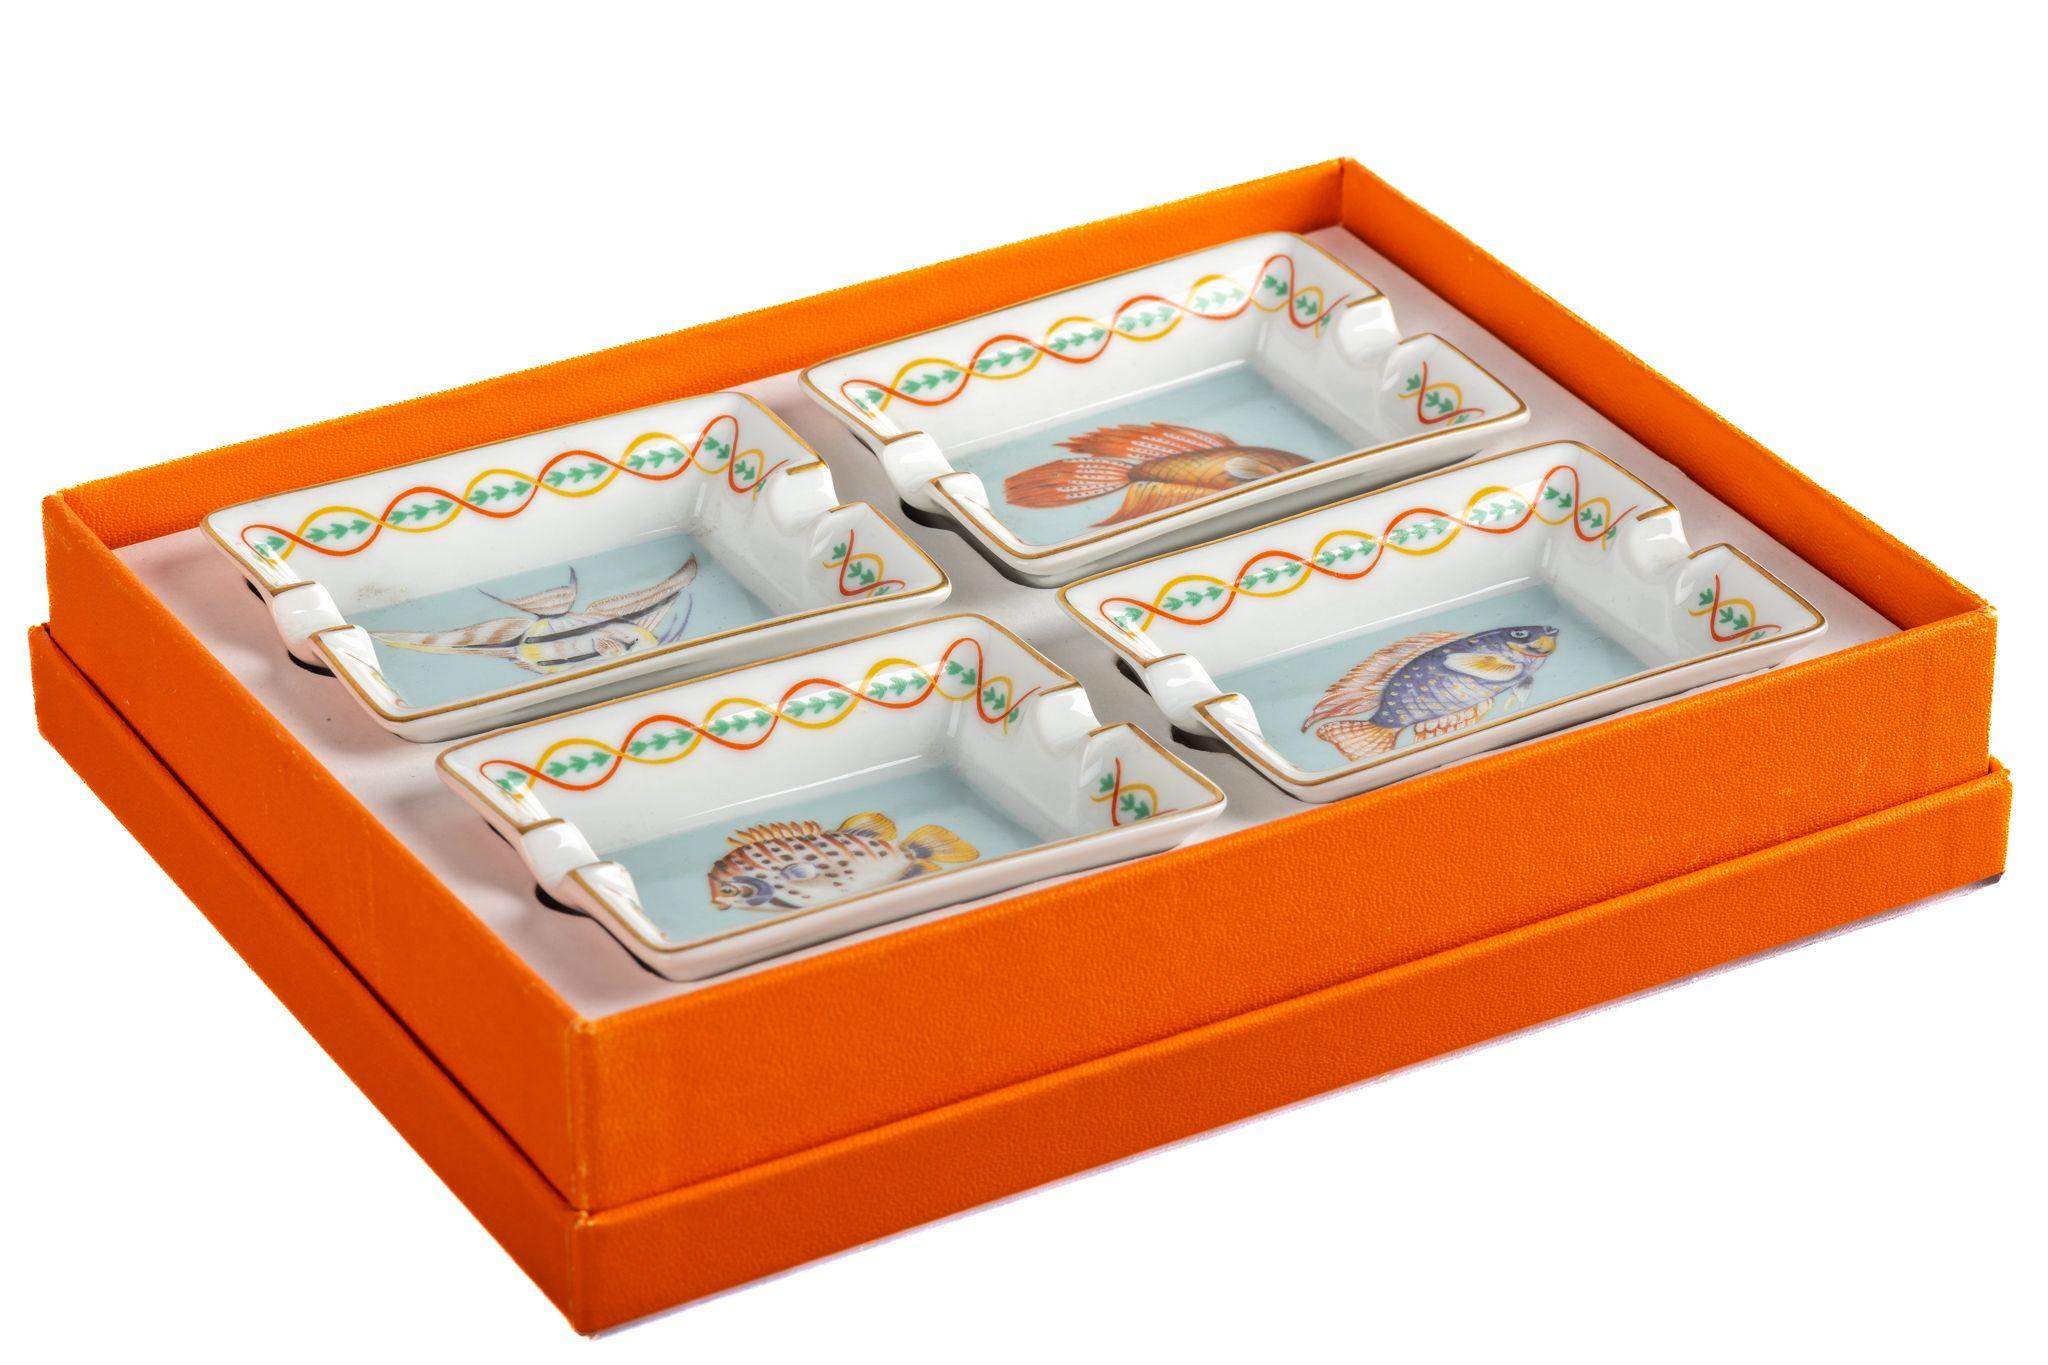 Hermes set of 4 multicolor mini ashtray with fish design. With original box.